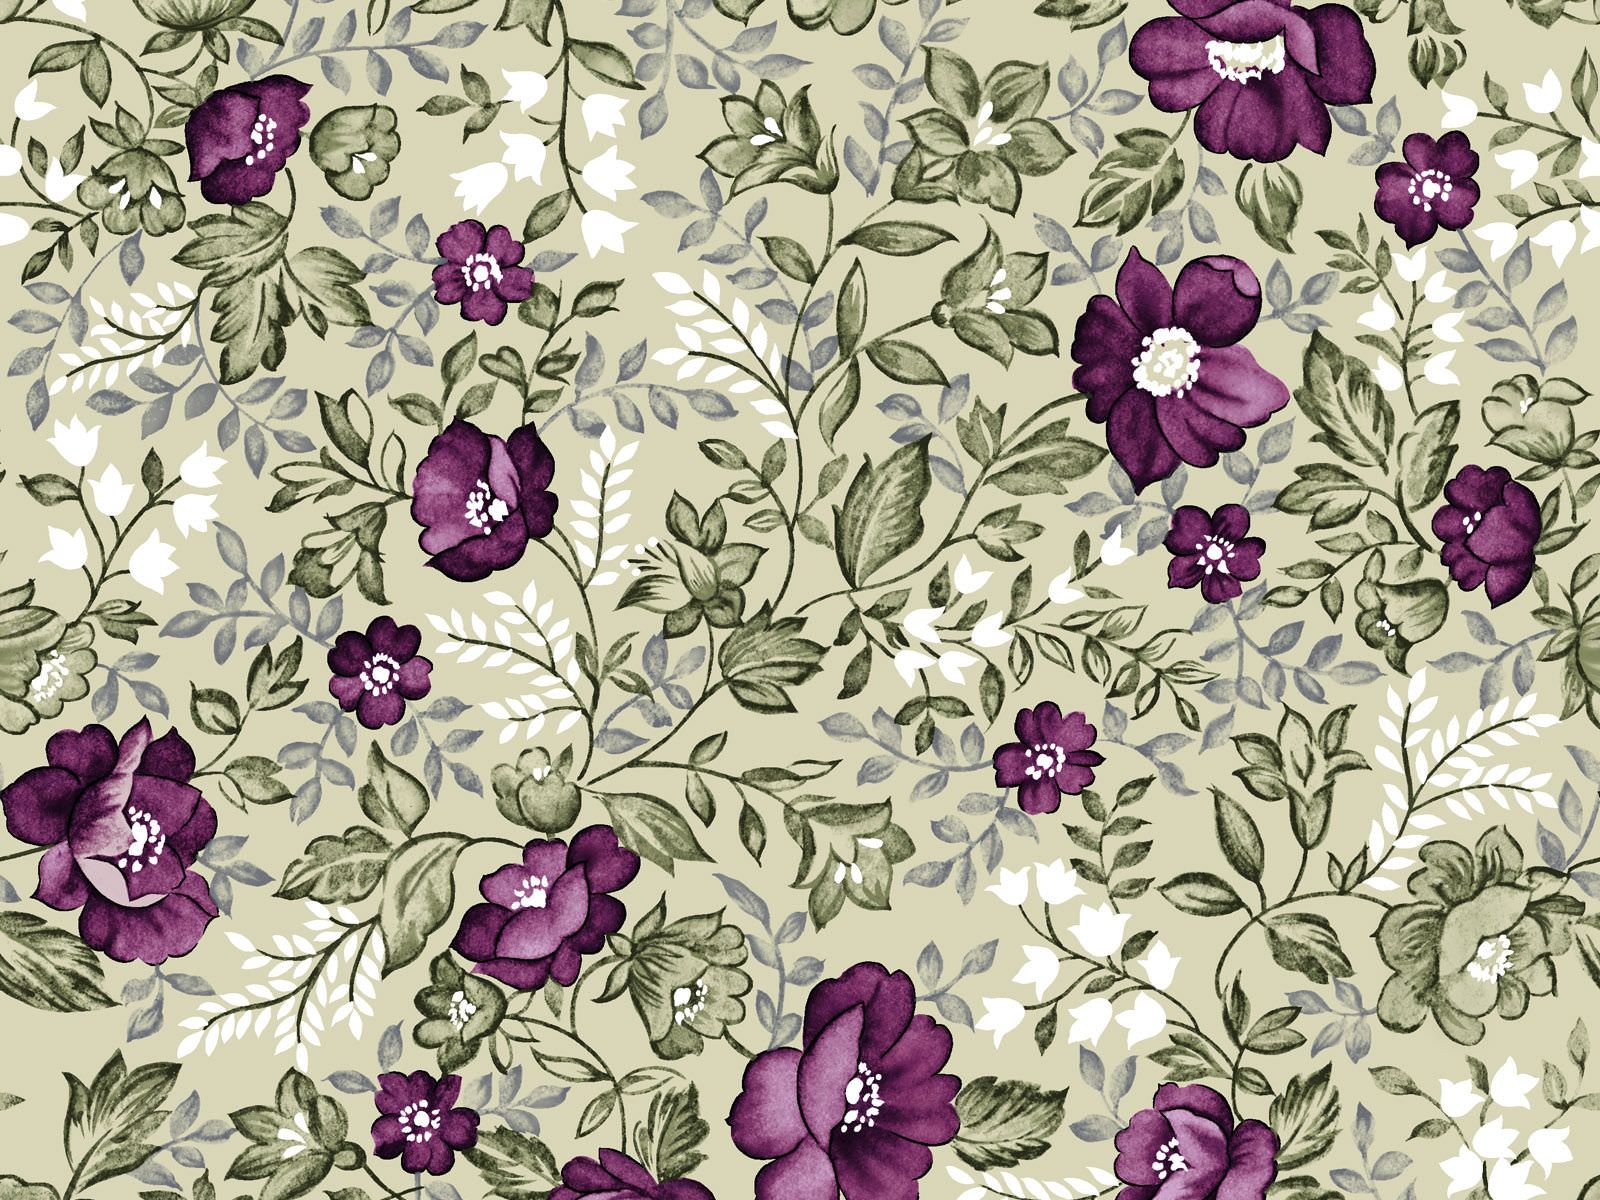 FREE Vintage Floral Wallpaper in PSD